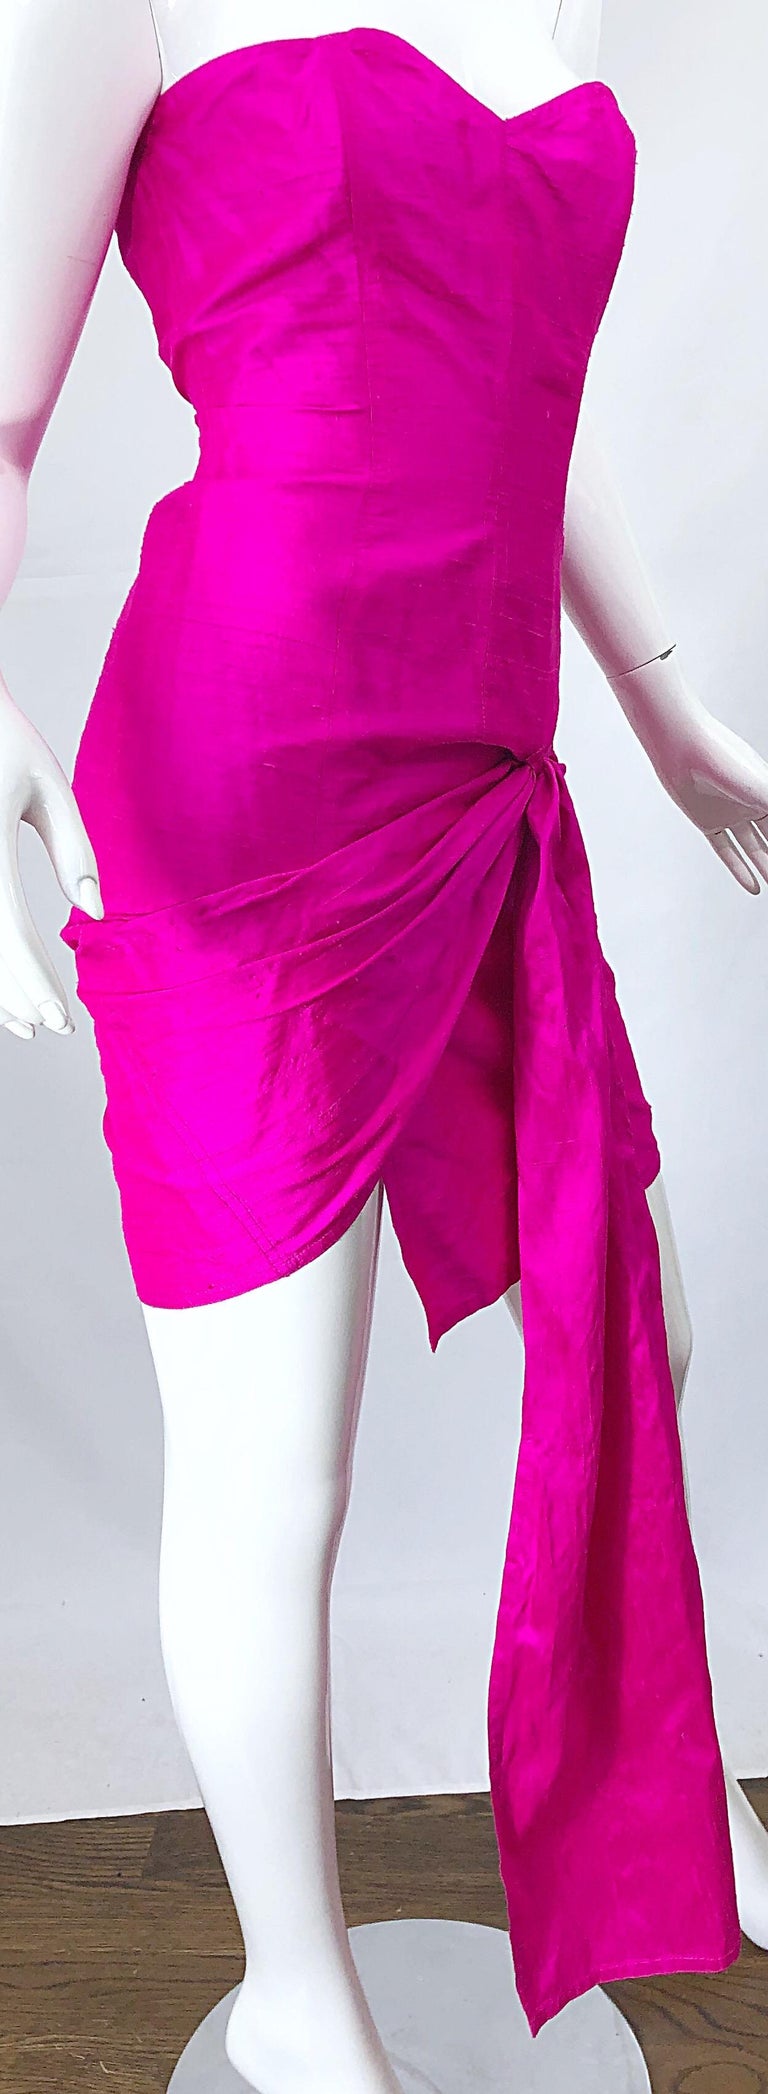 1980s Angelo Tarlazzi Shocking Hot Pink Avant Garde Silk Shantung Vintage Dress For Sale 1